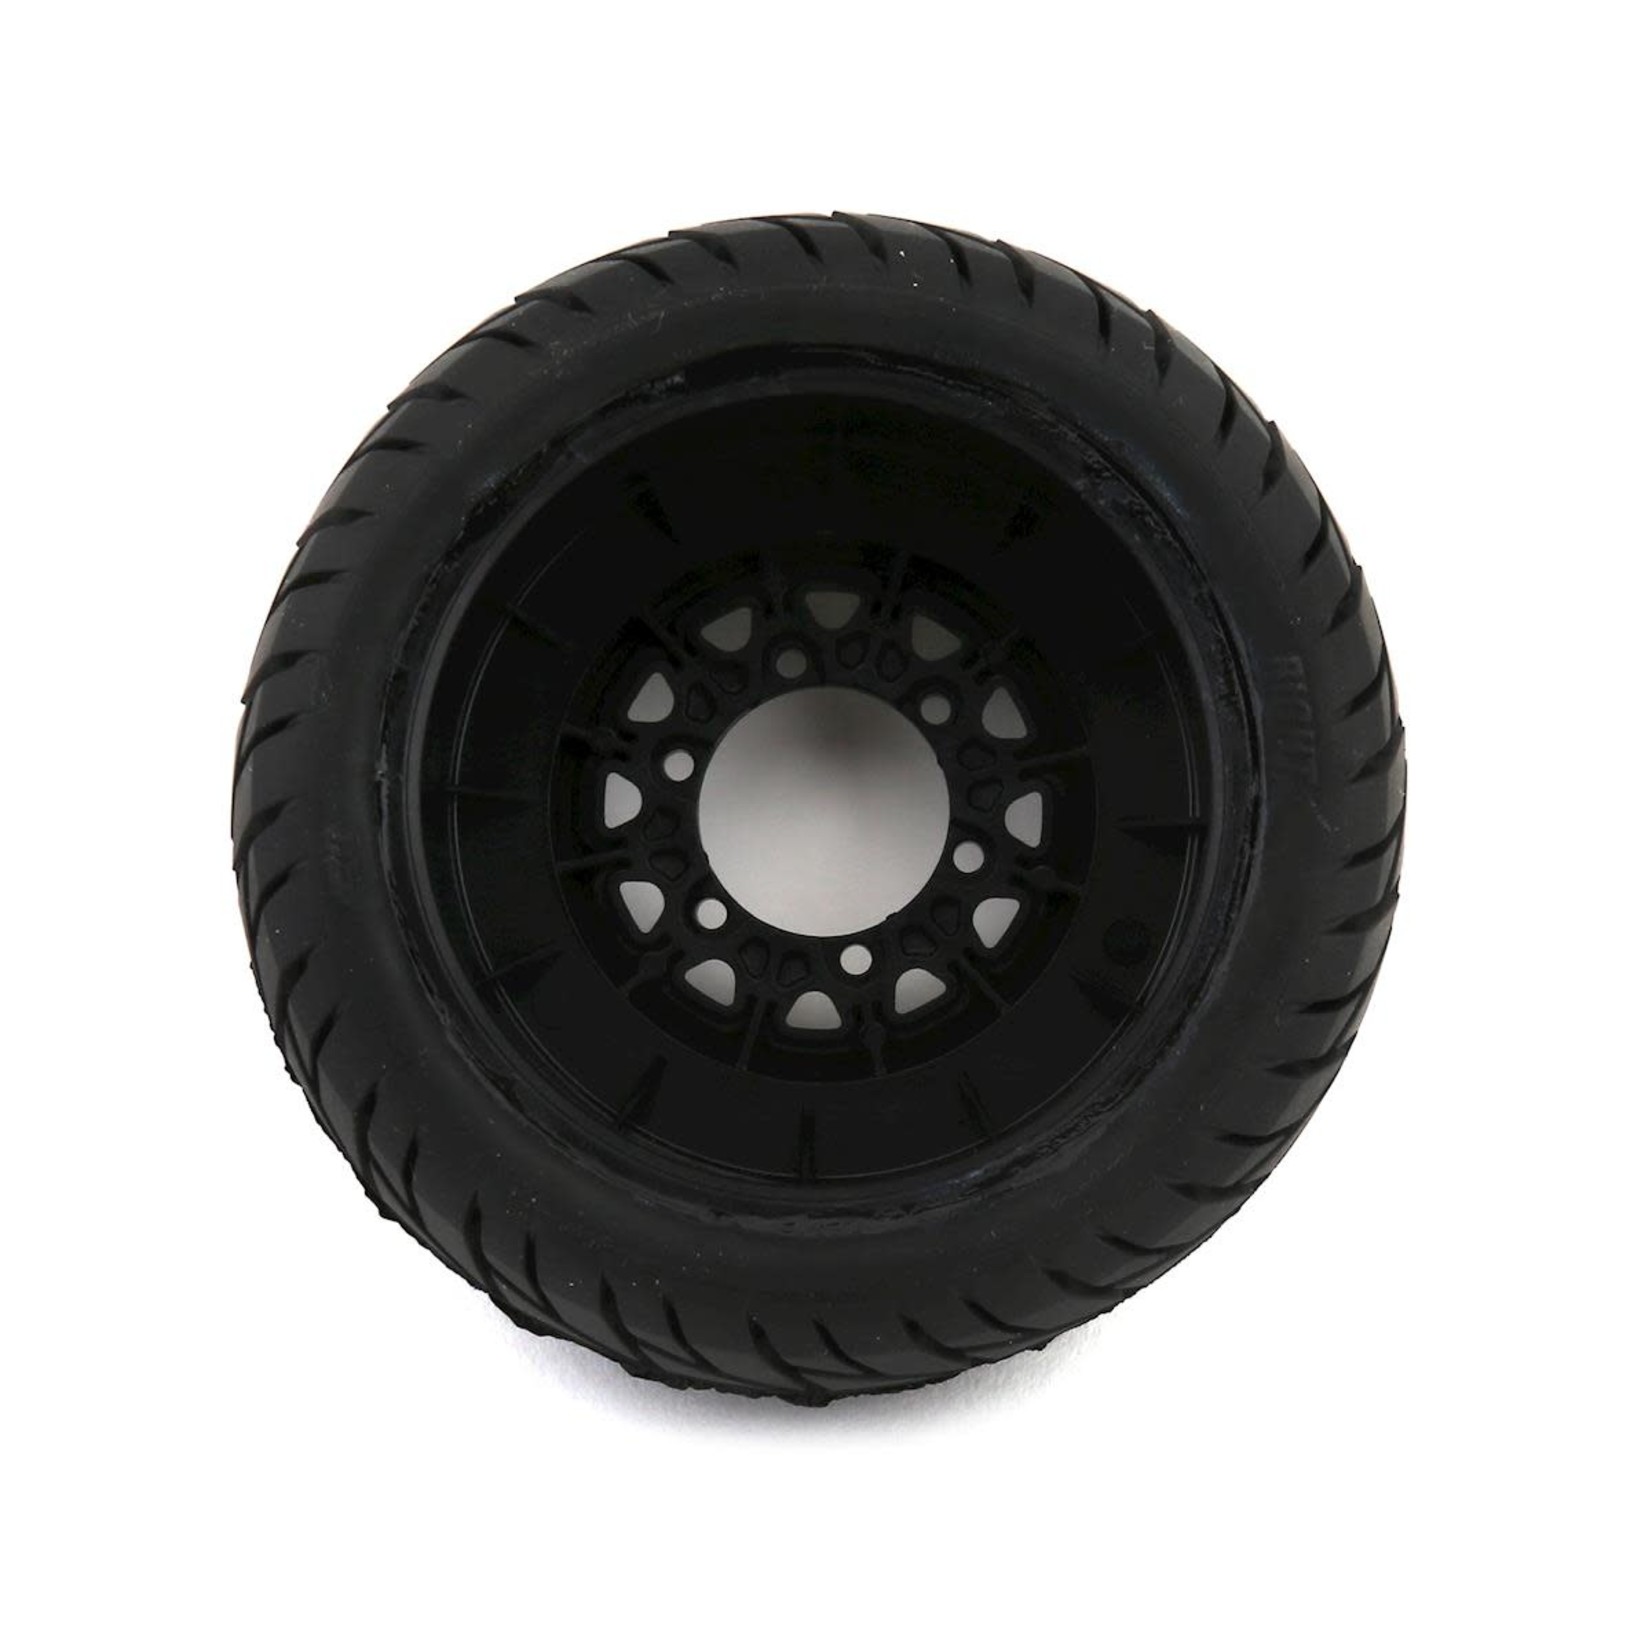 Pro-Line Pro-Line Street Fighter SC 2.2/3.0 Tires w/Raid Wheels (Black) (2) (M2) w/12mm Removable Hex #1167-10